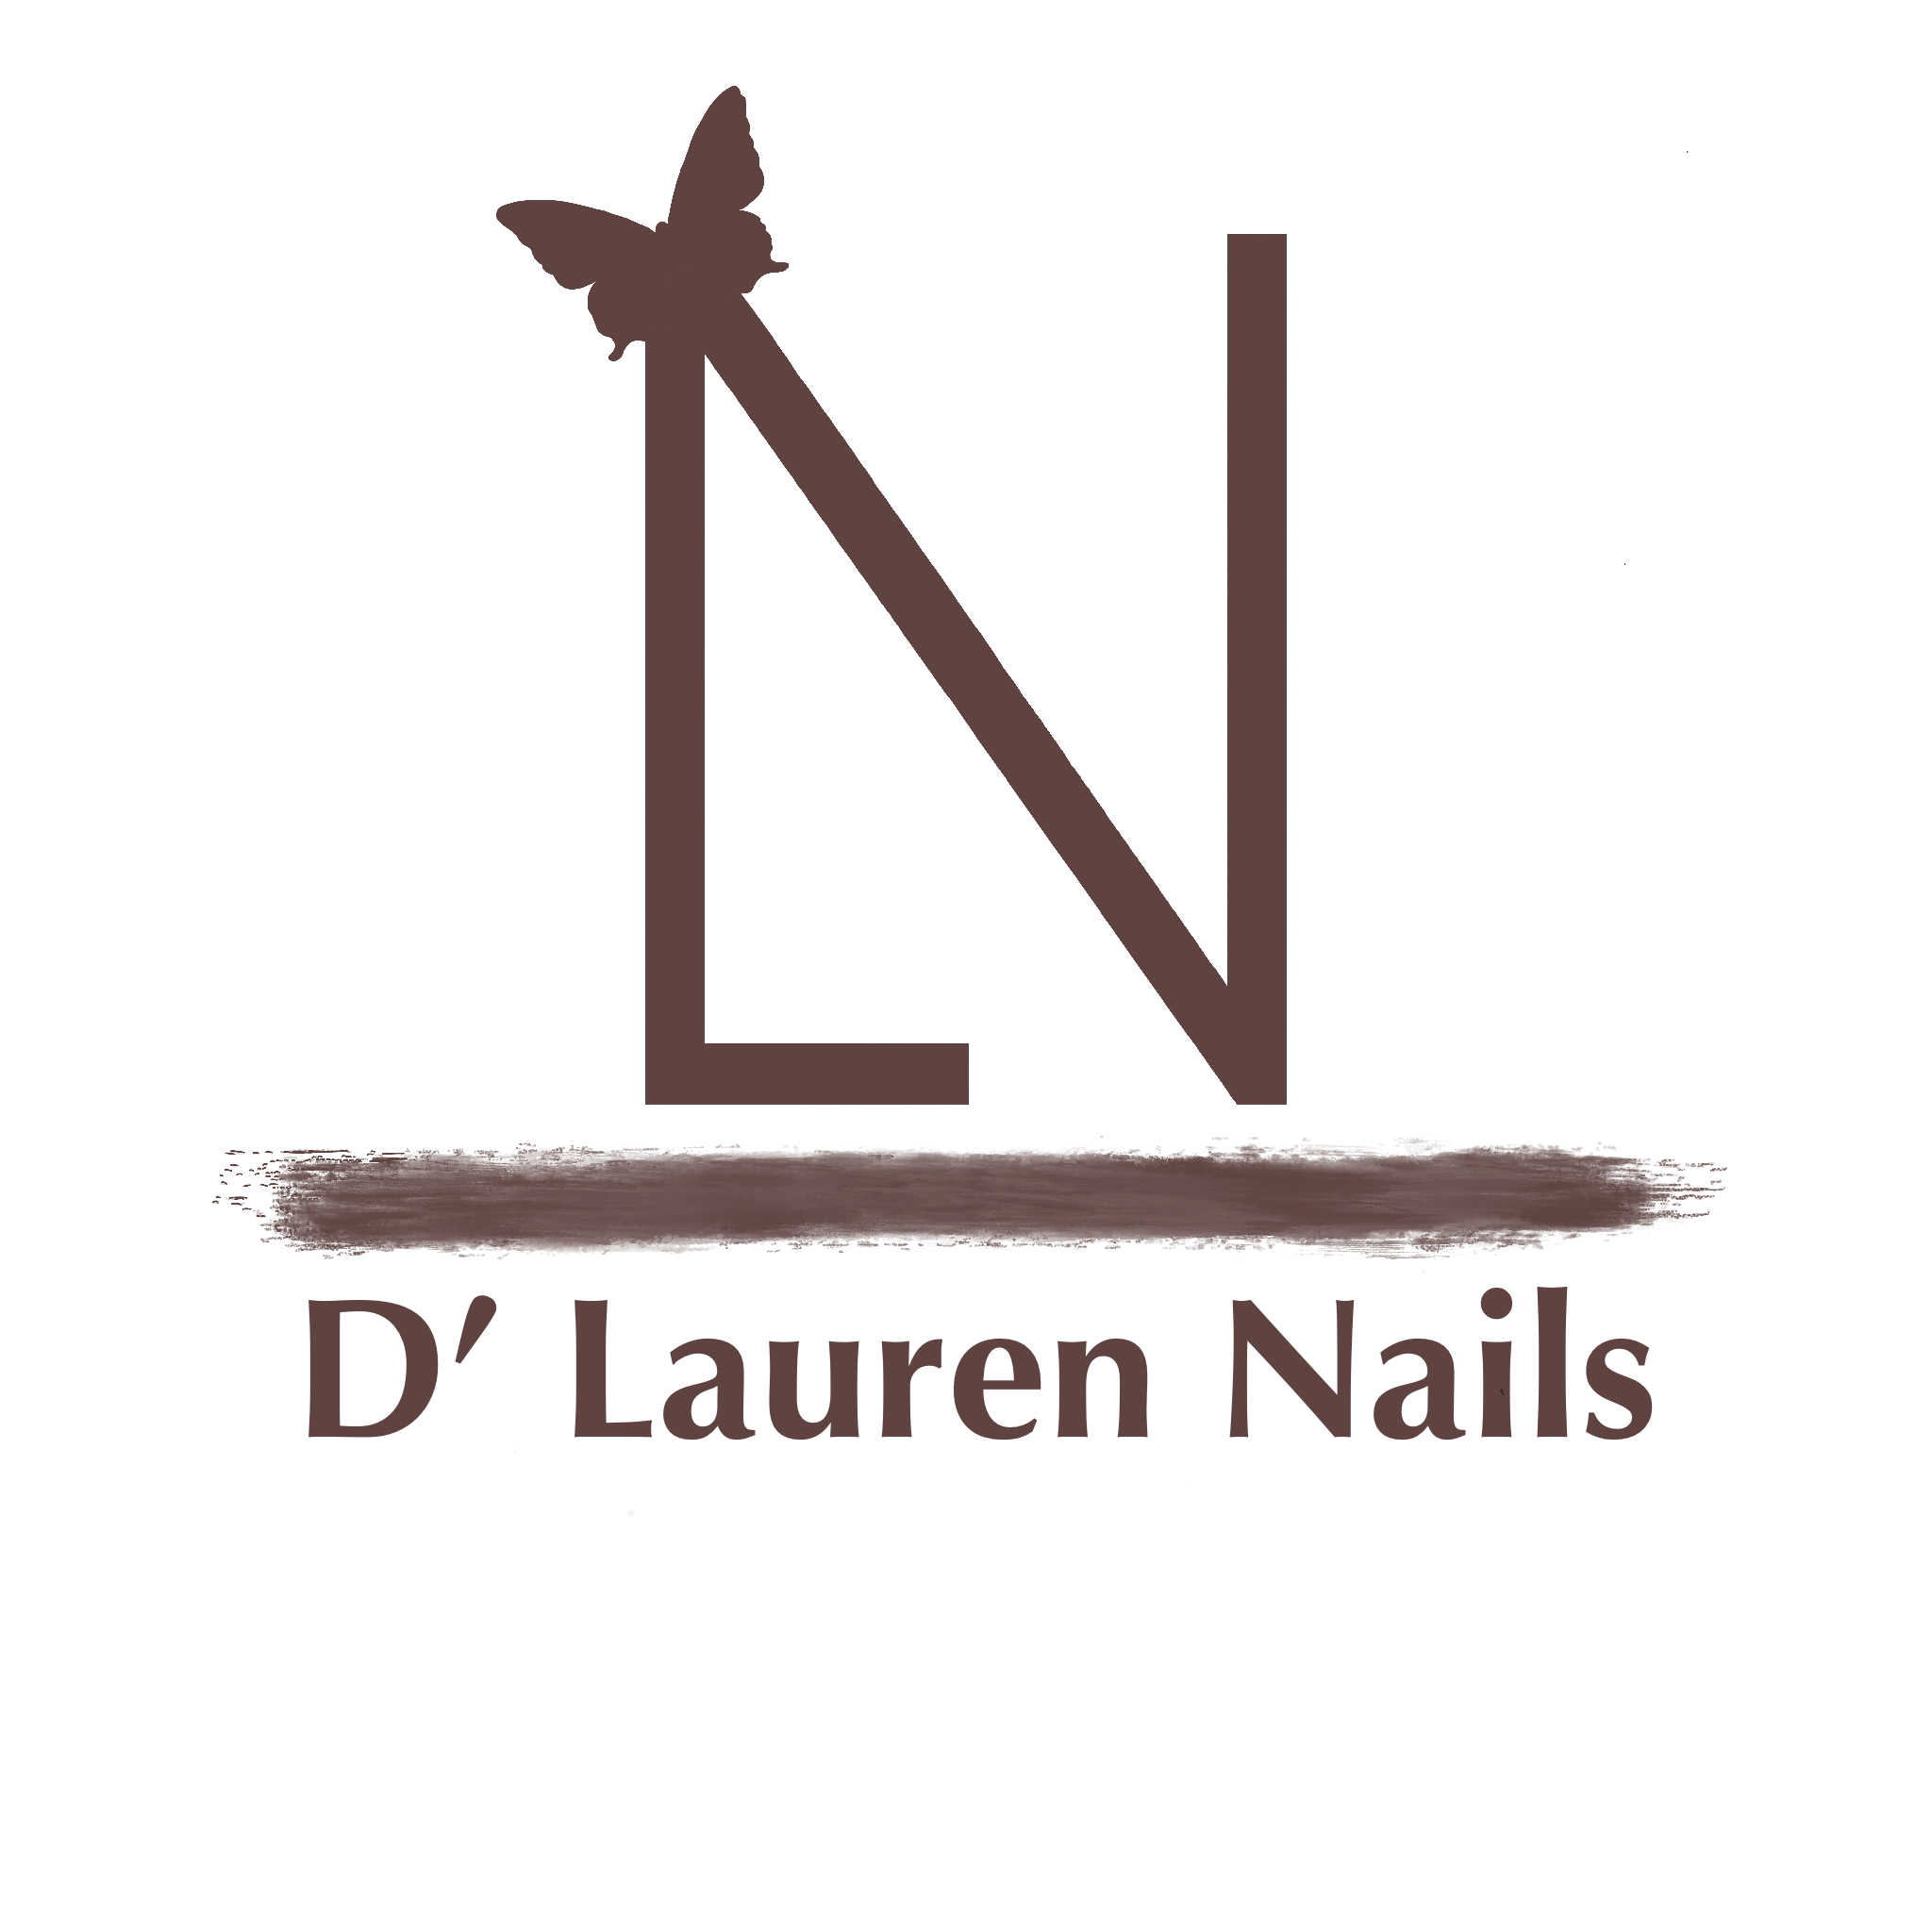 D’ Lauren Nails